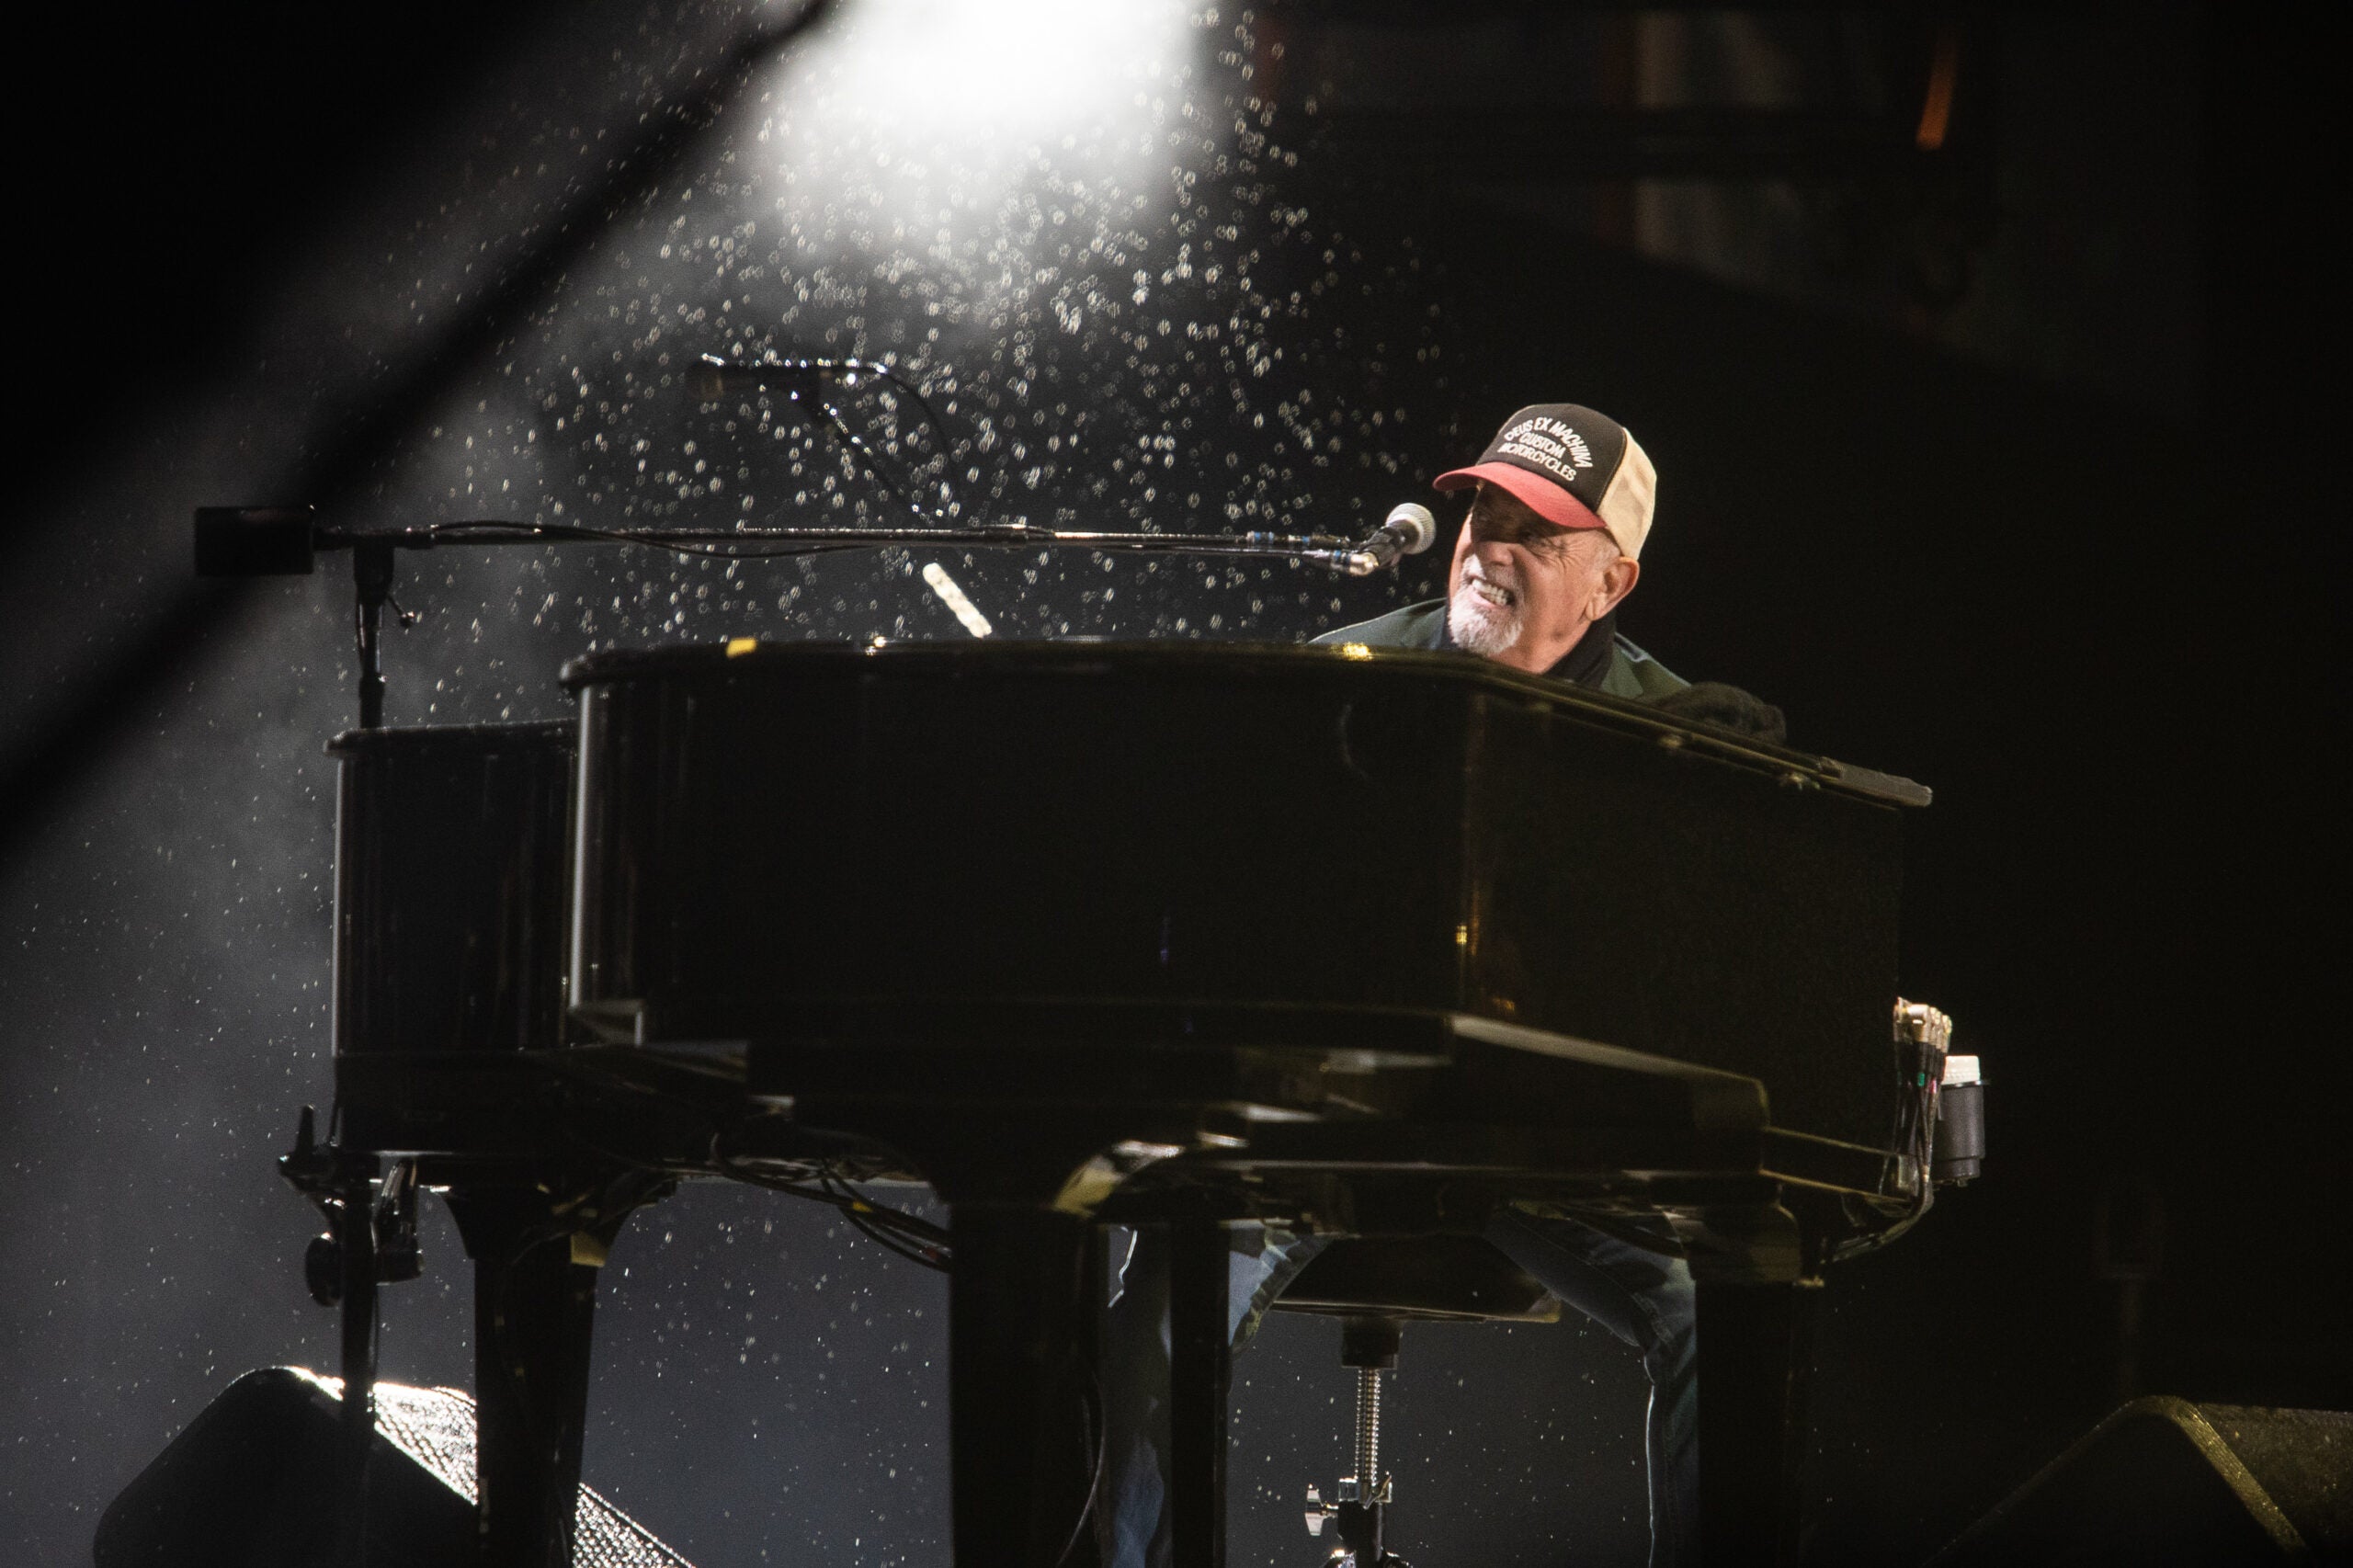 Billy Joel performs at Gillette Stadium.